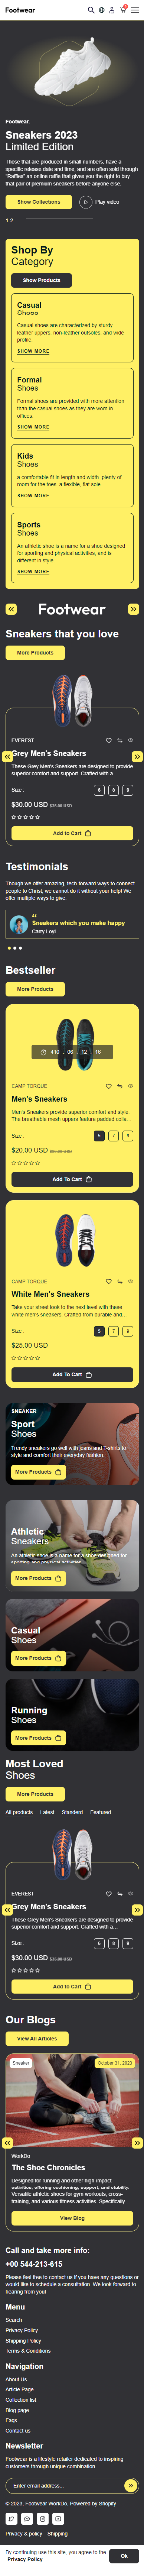 Footwear Shopify Theme - WorkDo